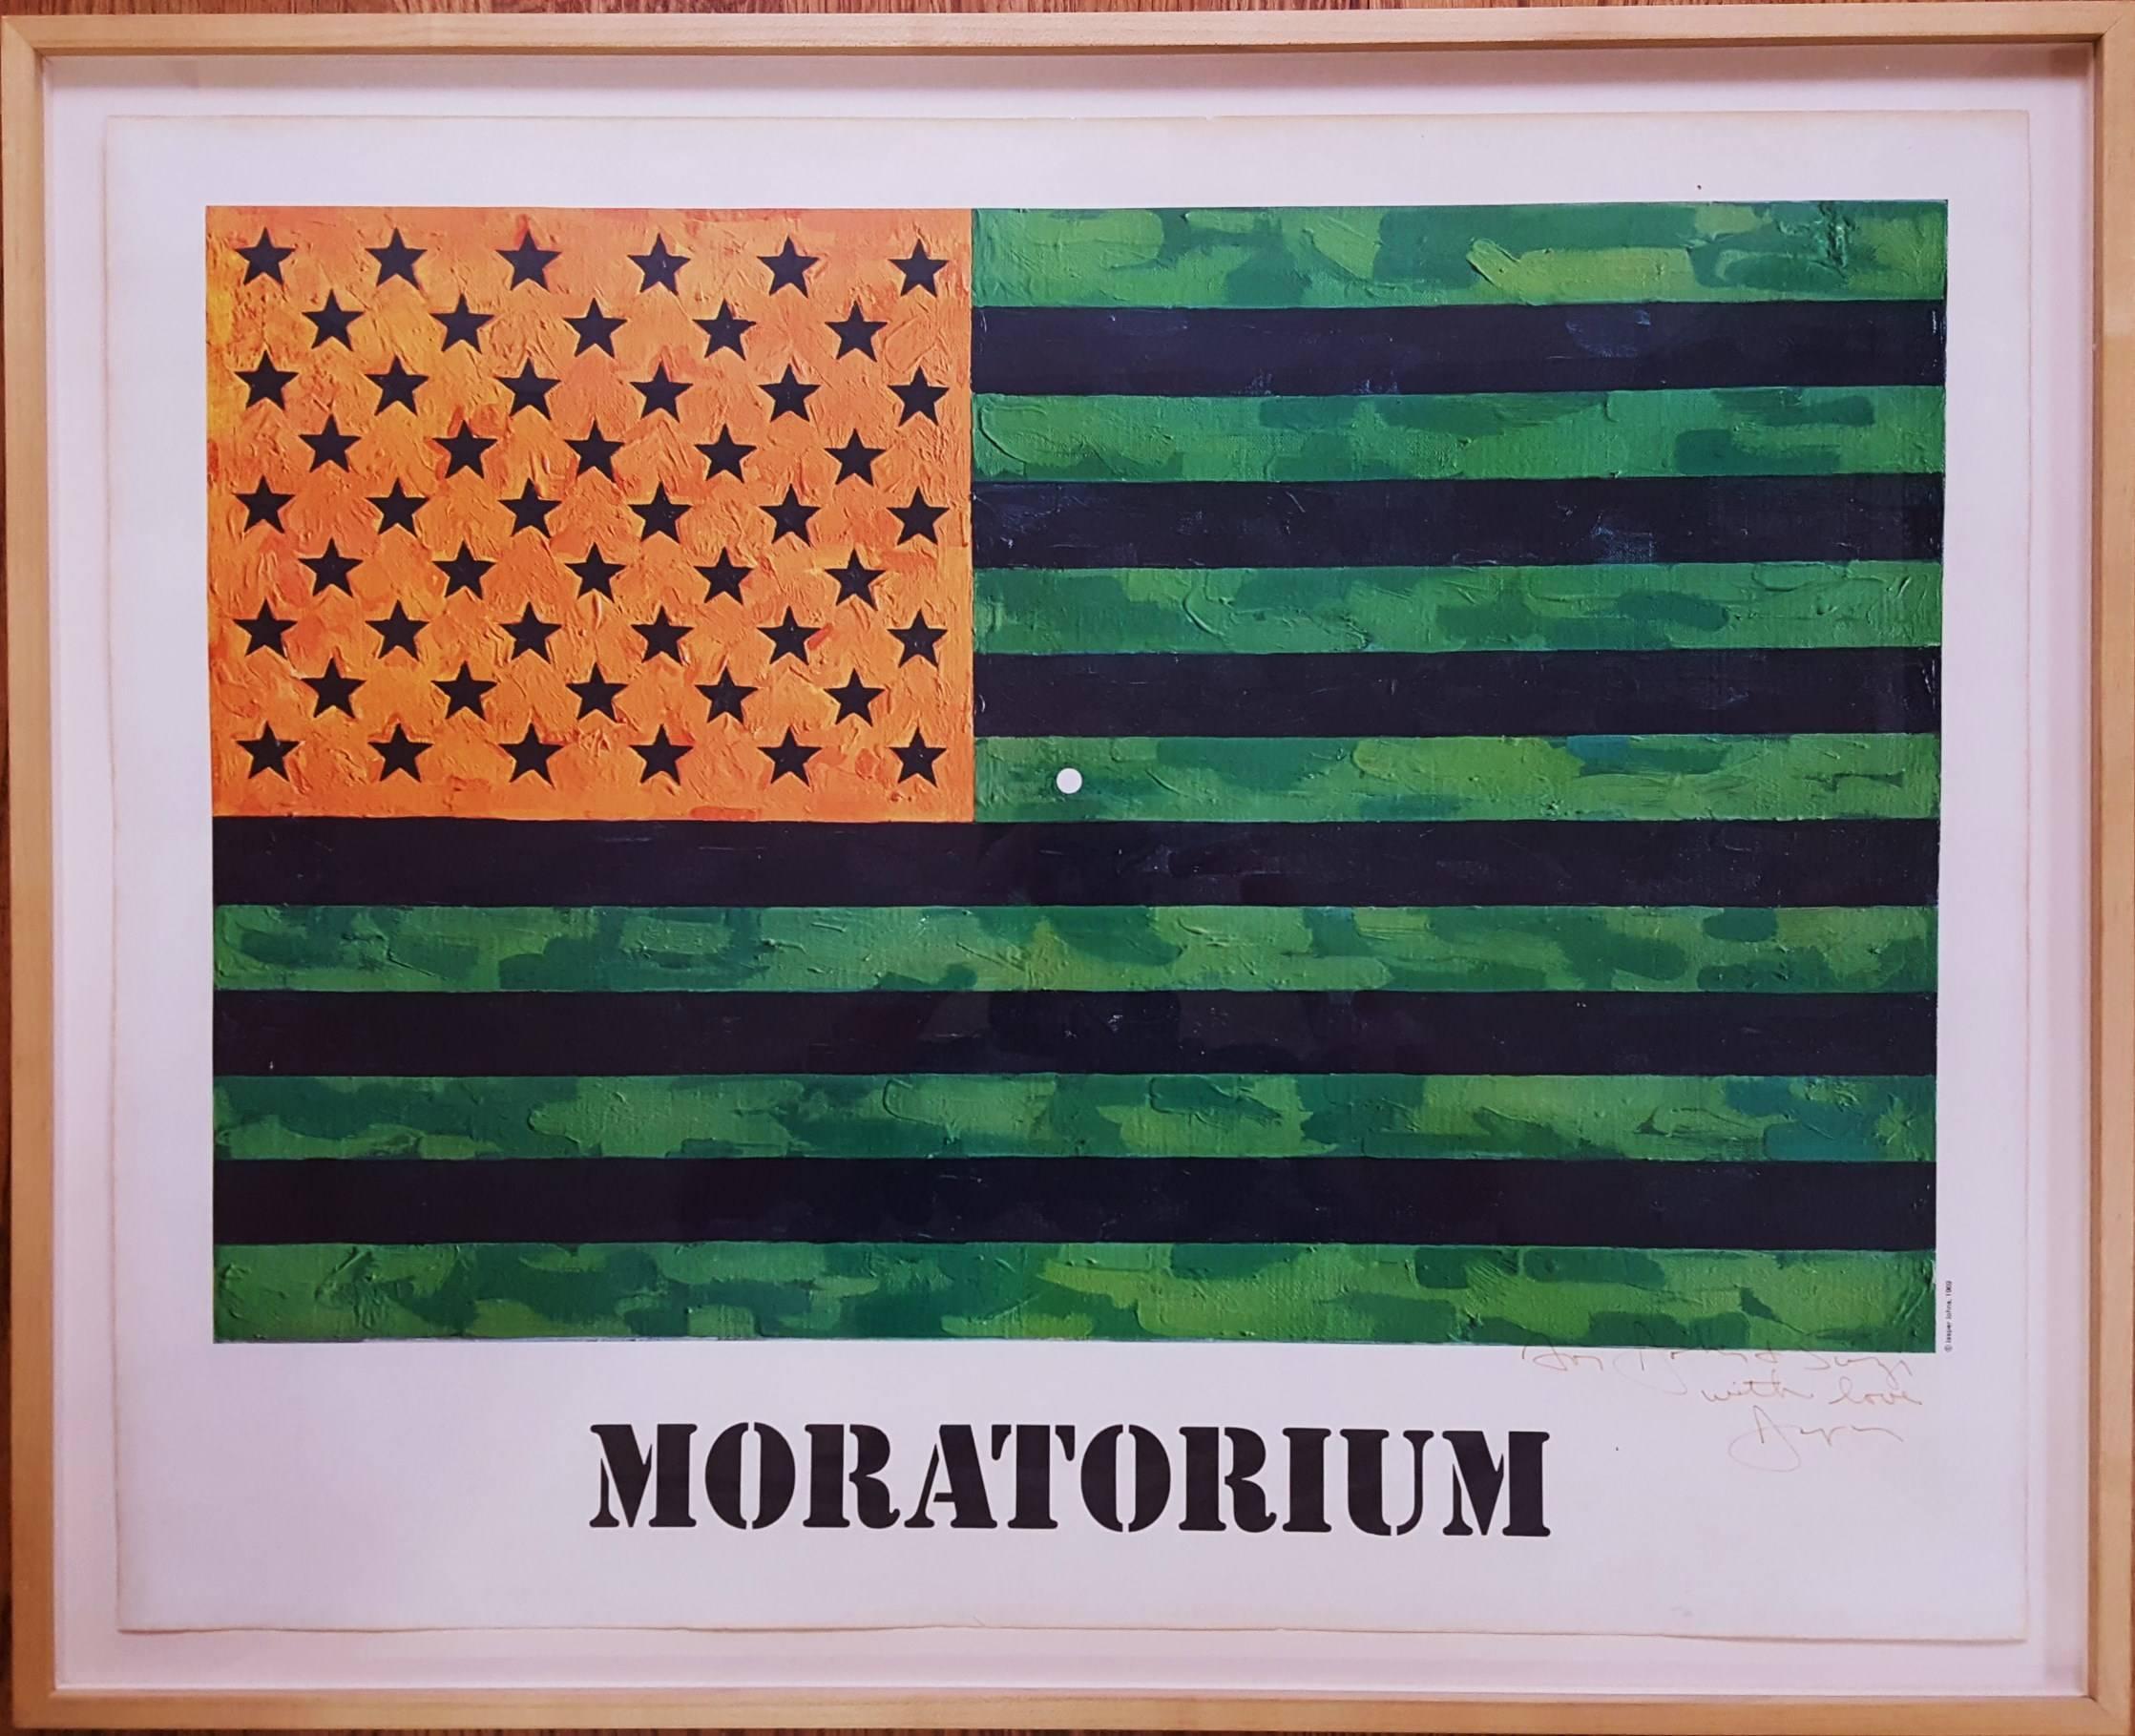 (Moratorium) Flag Poster - Print by (After) Jasper Johns